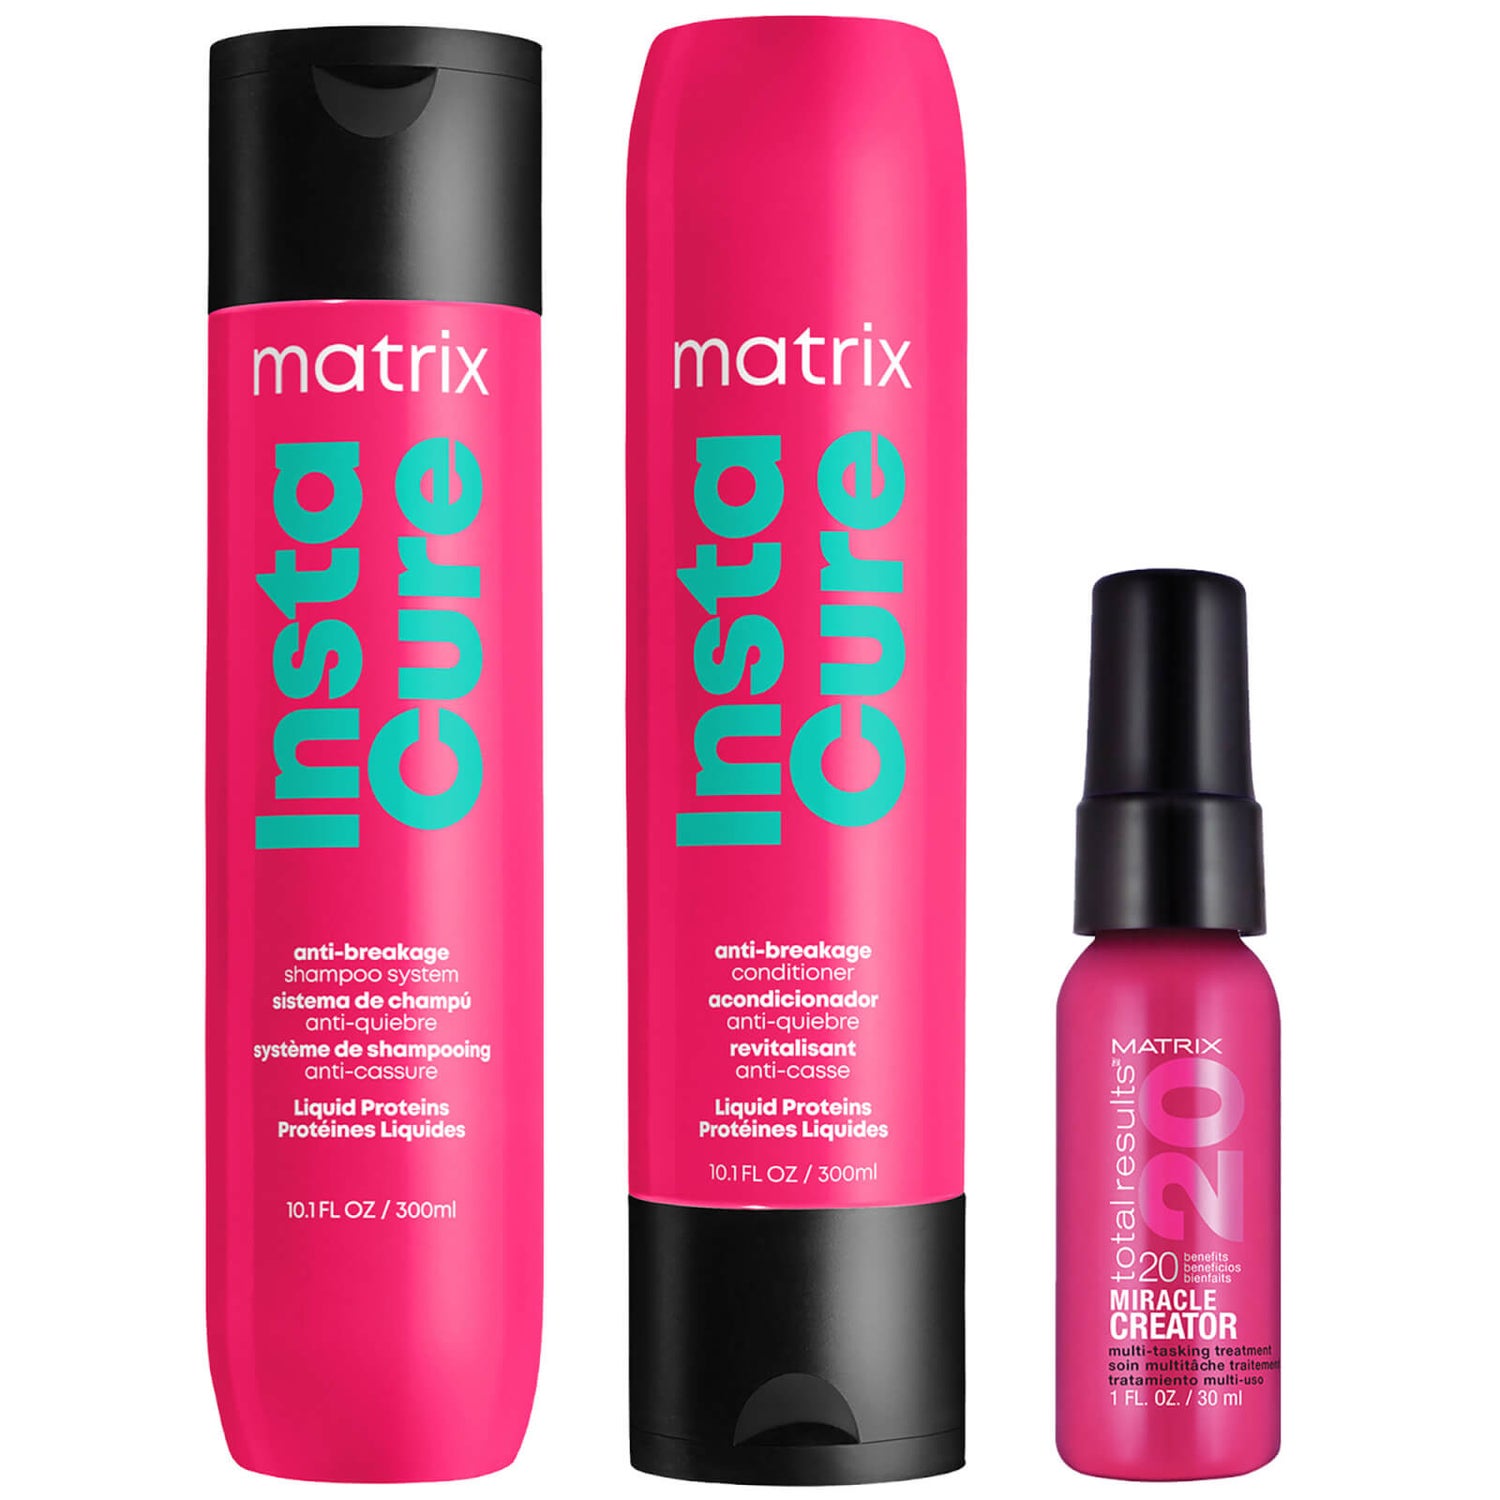 Matrix InstaCure Anti-Breakage Shampoo 300ml, Conditioner 300ml + Mini Miracle Creator 30ml To Strengthen Hair (Worth £32.70)